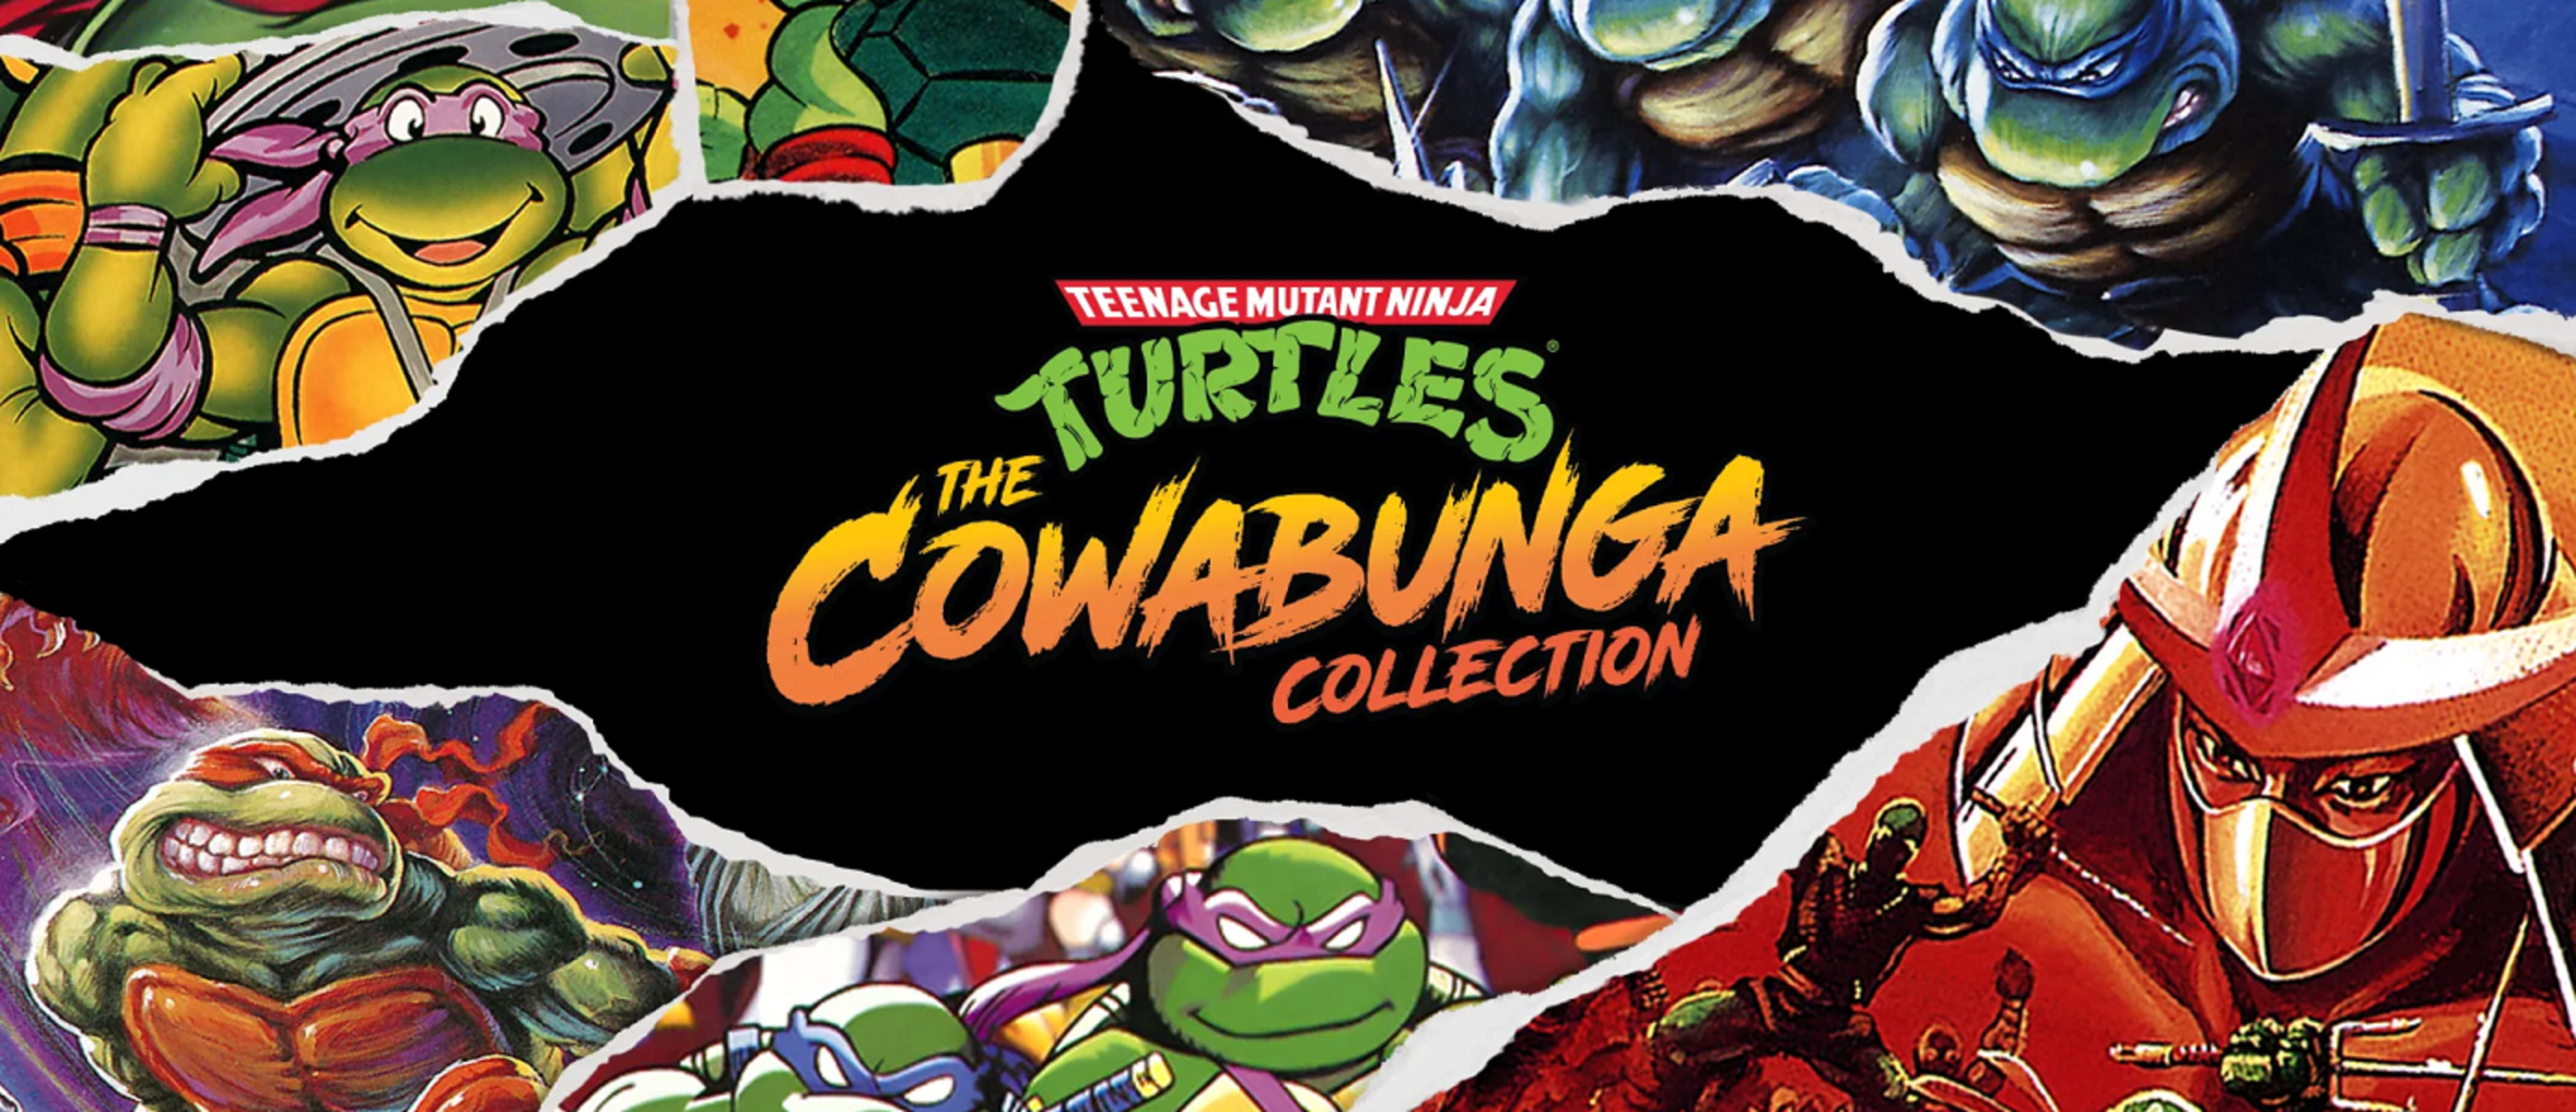 Mutant ninja turtles cowabunga collection. Cowabunga Черепашки ниндзя. Черепашки ниндзя сега. Черепашки ниндзя 2022. Teenage Mutant Ninja Turtles: the Cowabunga collection ключ.